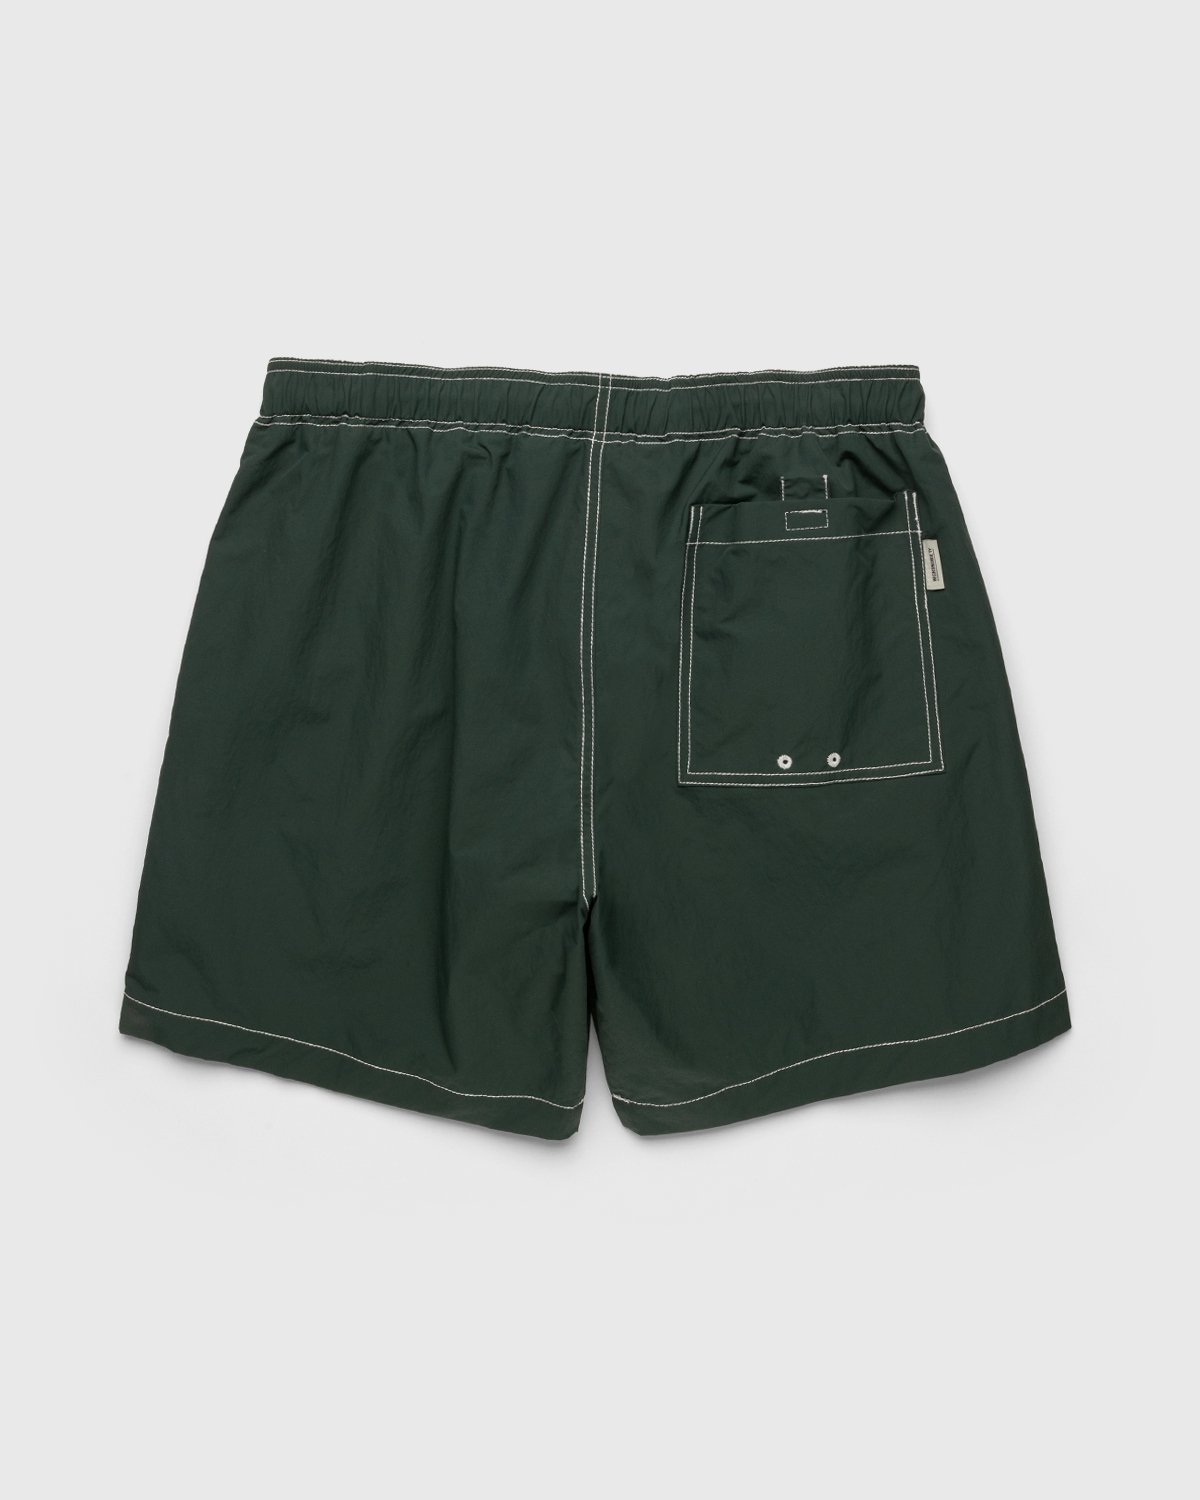 Highsnobiety - Contrast Brushed Nylon Water Shorts Green - Clothing - Green - Image 2